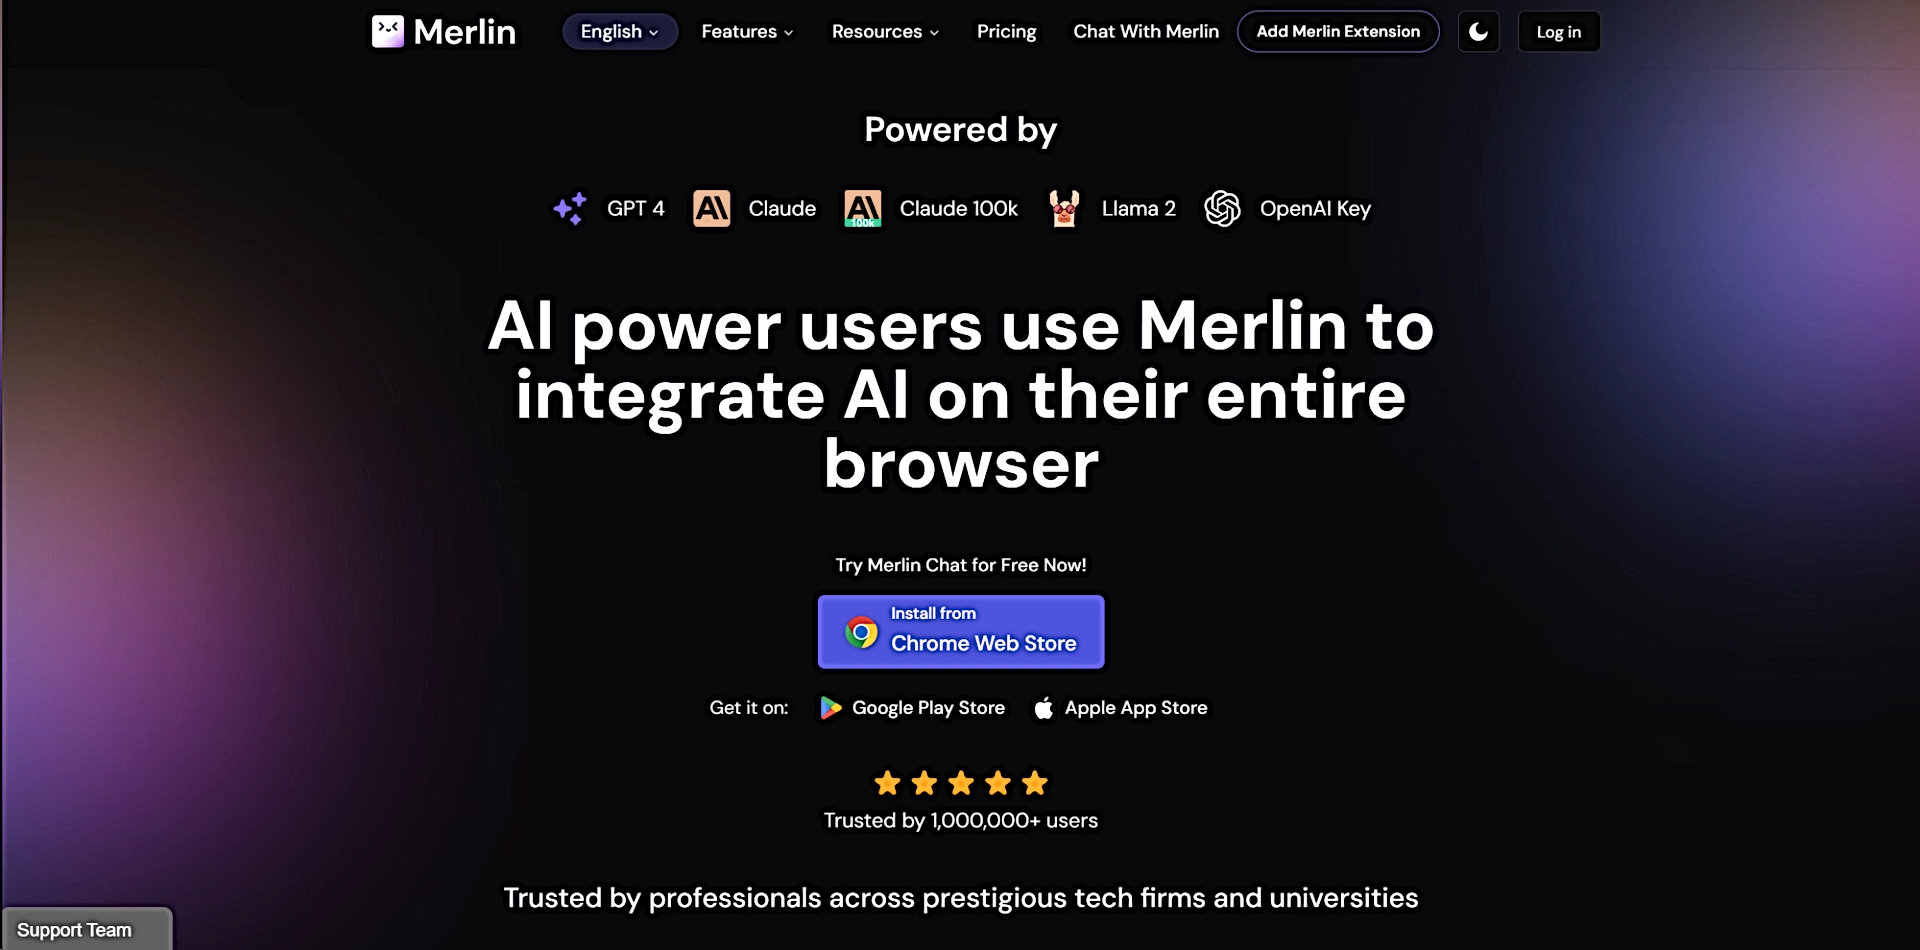 Merlin featured